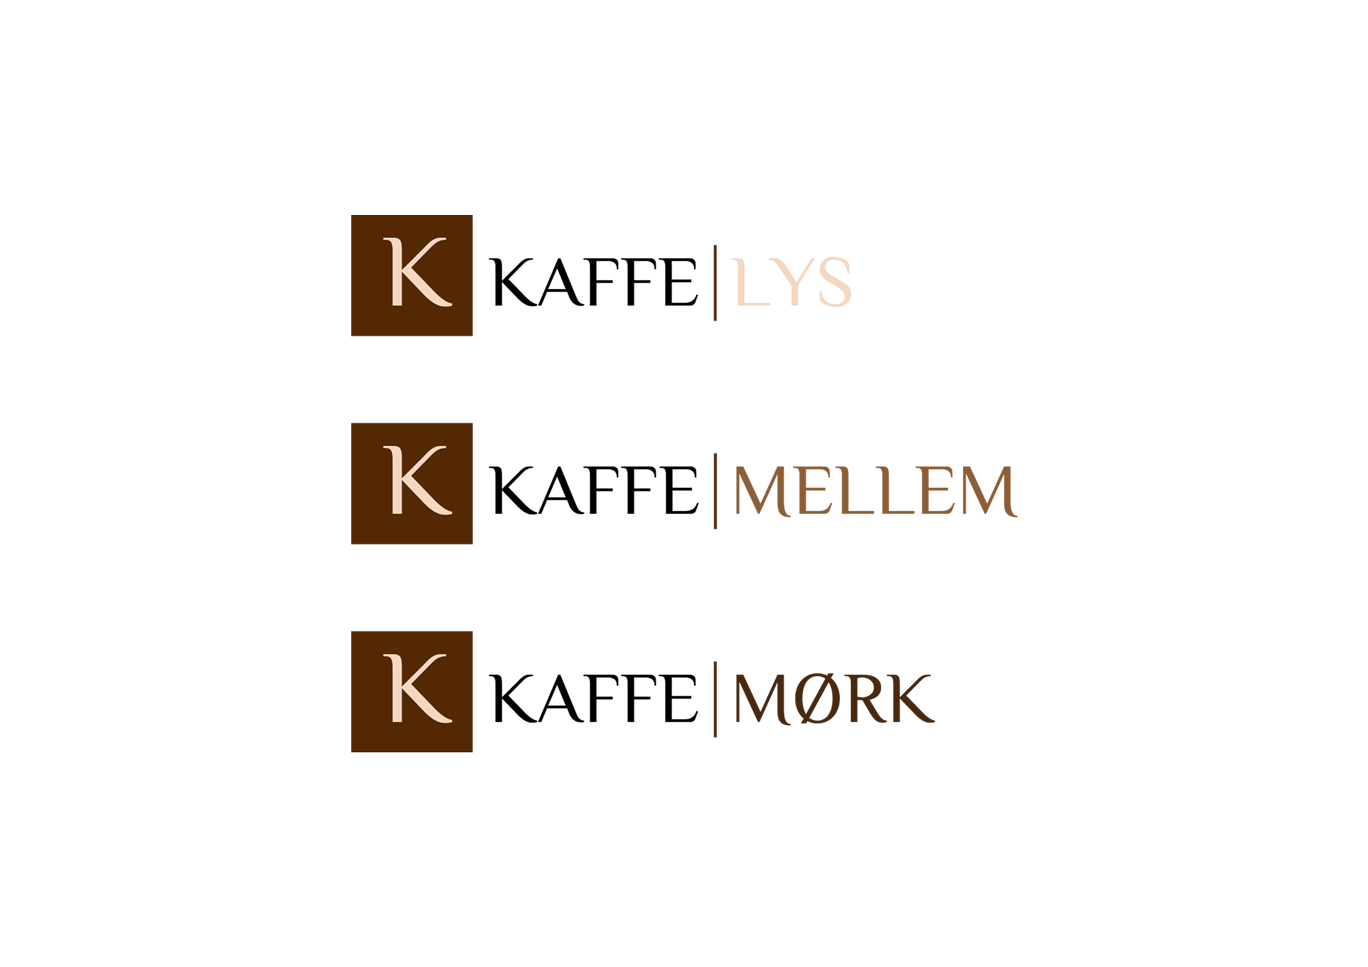 kkaffe-new-logo